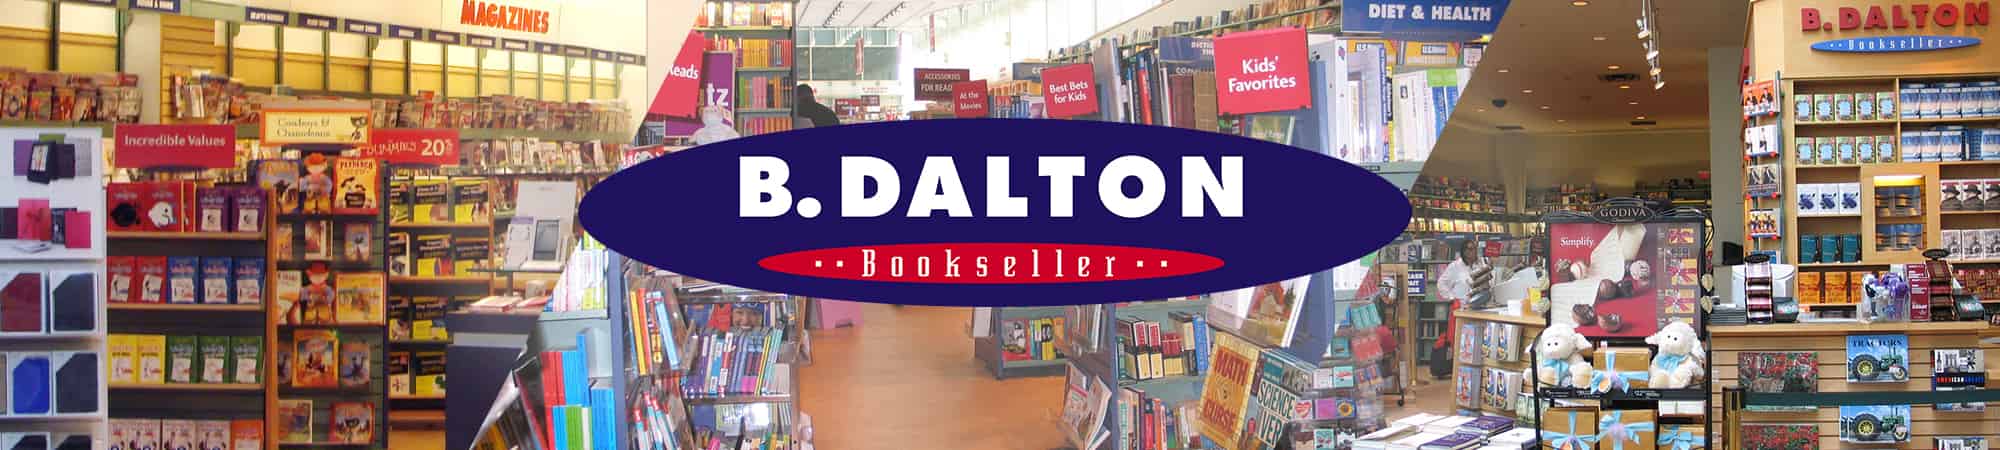 B. Dalton Booksellers